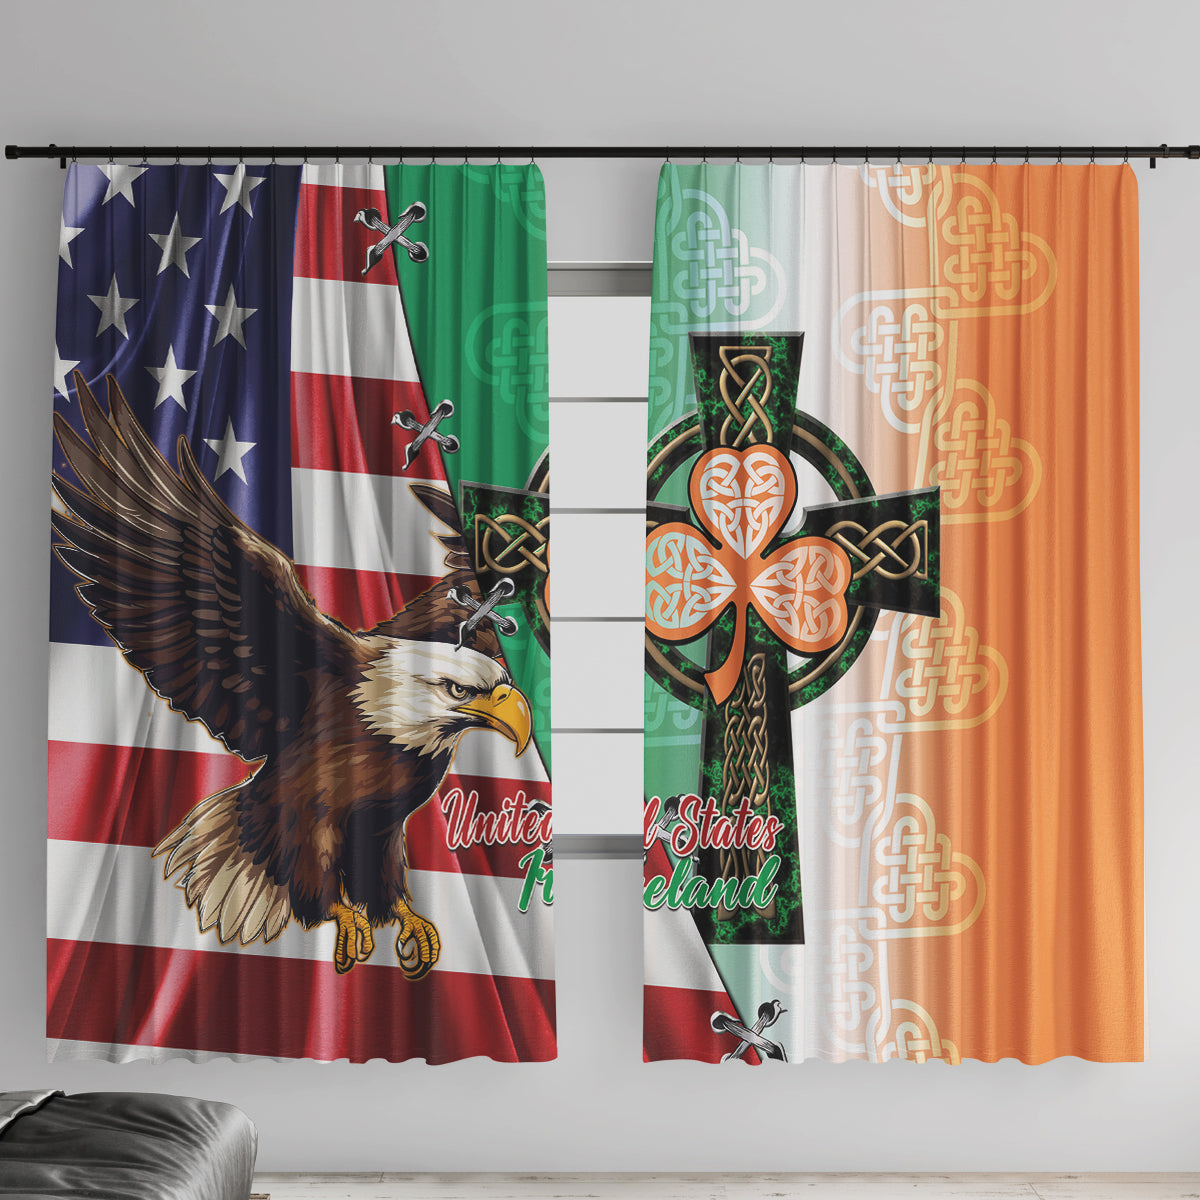 United States And Ireland Window Curtain USA Eagle With Irish Celtic Cross